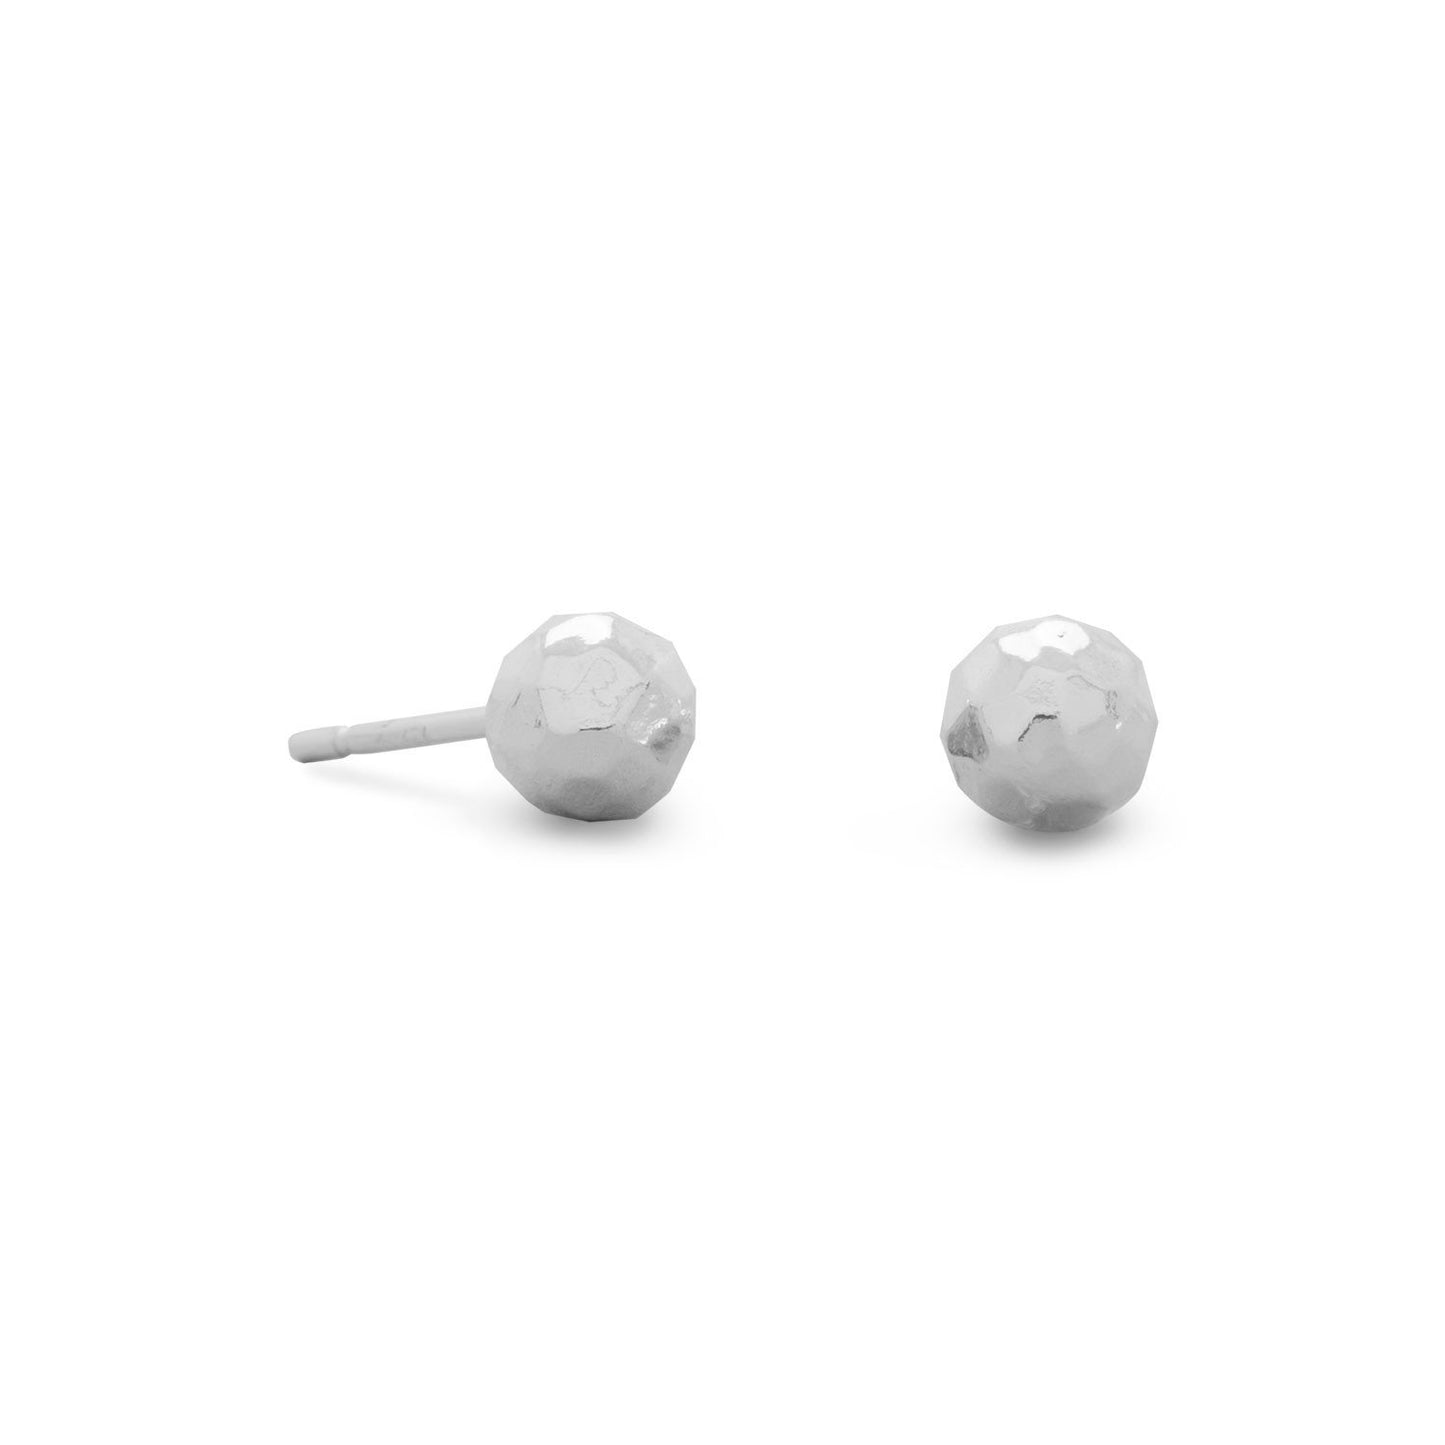 5mm Hammered Ball Earrings